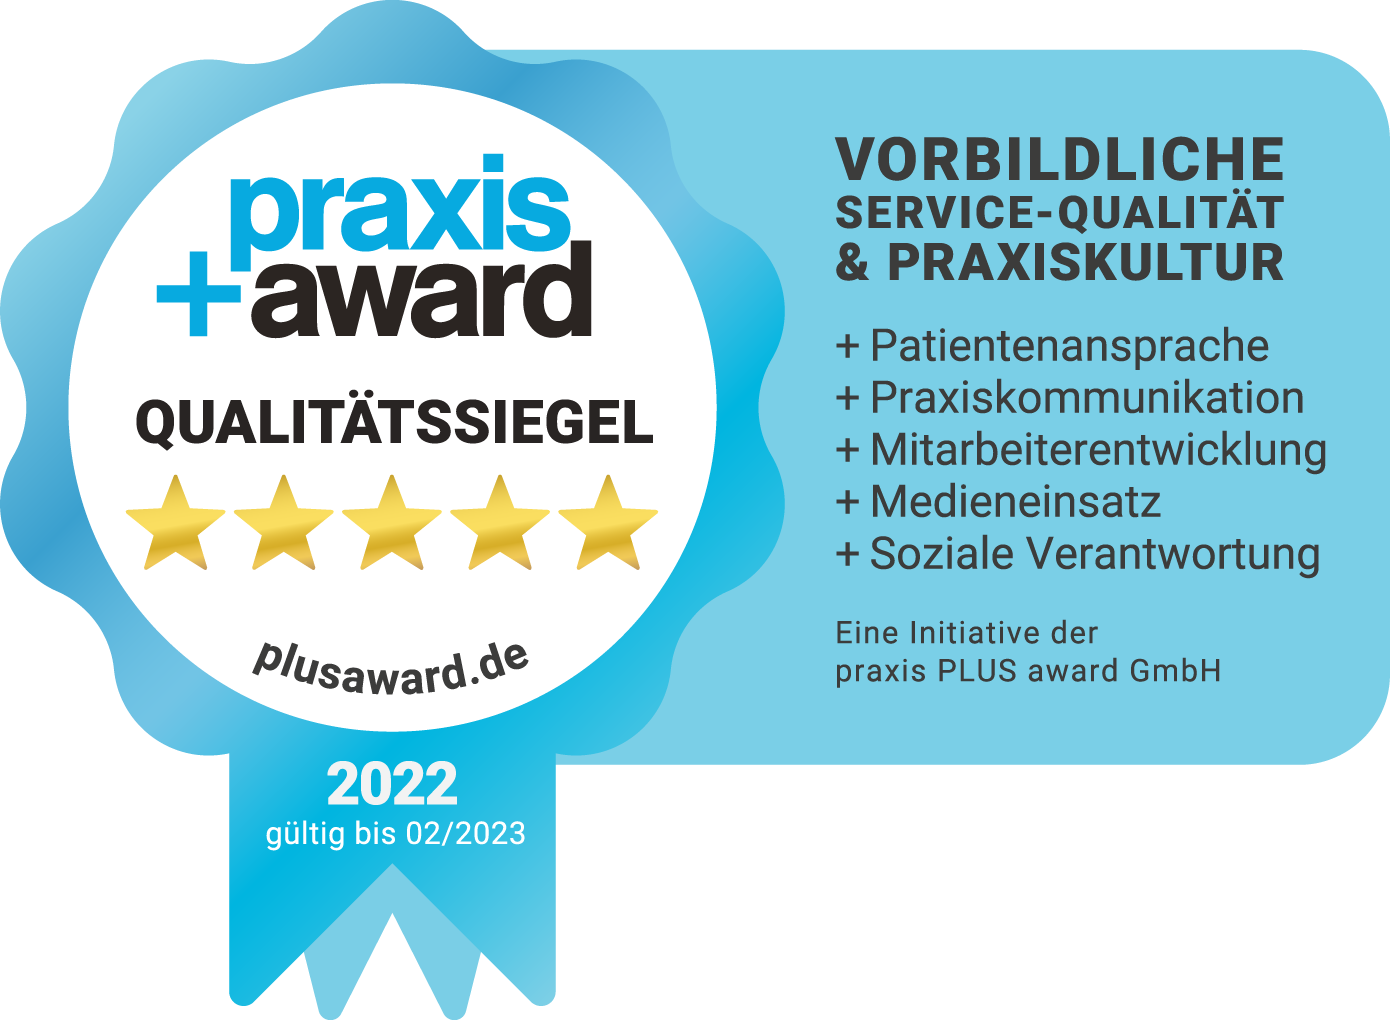 Zahnarzt Krefeld - Dr. Johannes Boldt - Praxis+Award Qualitätssiegel 2022